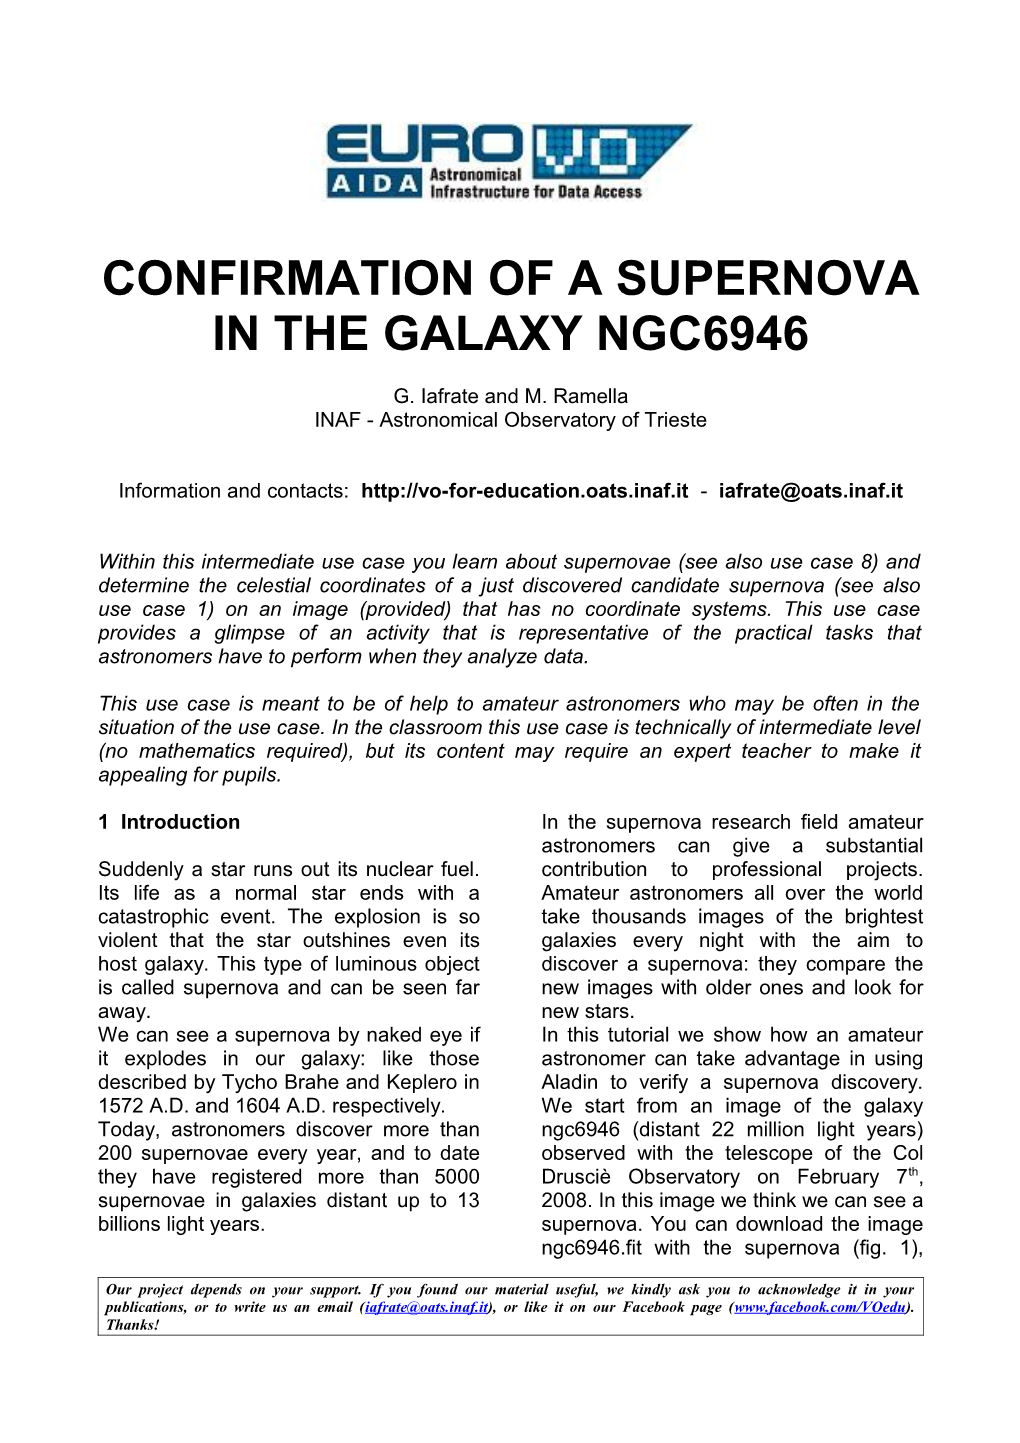 Confirmation of a Supernova